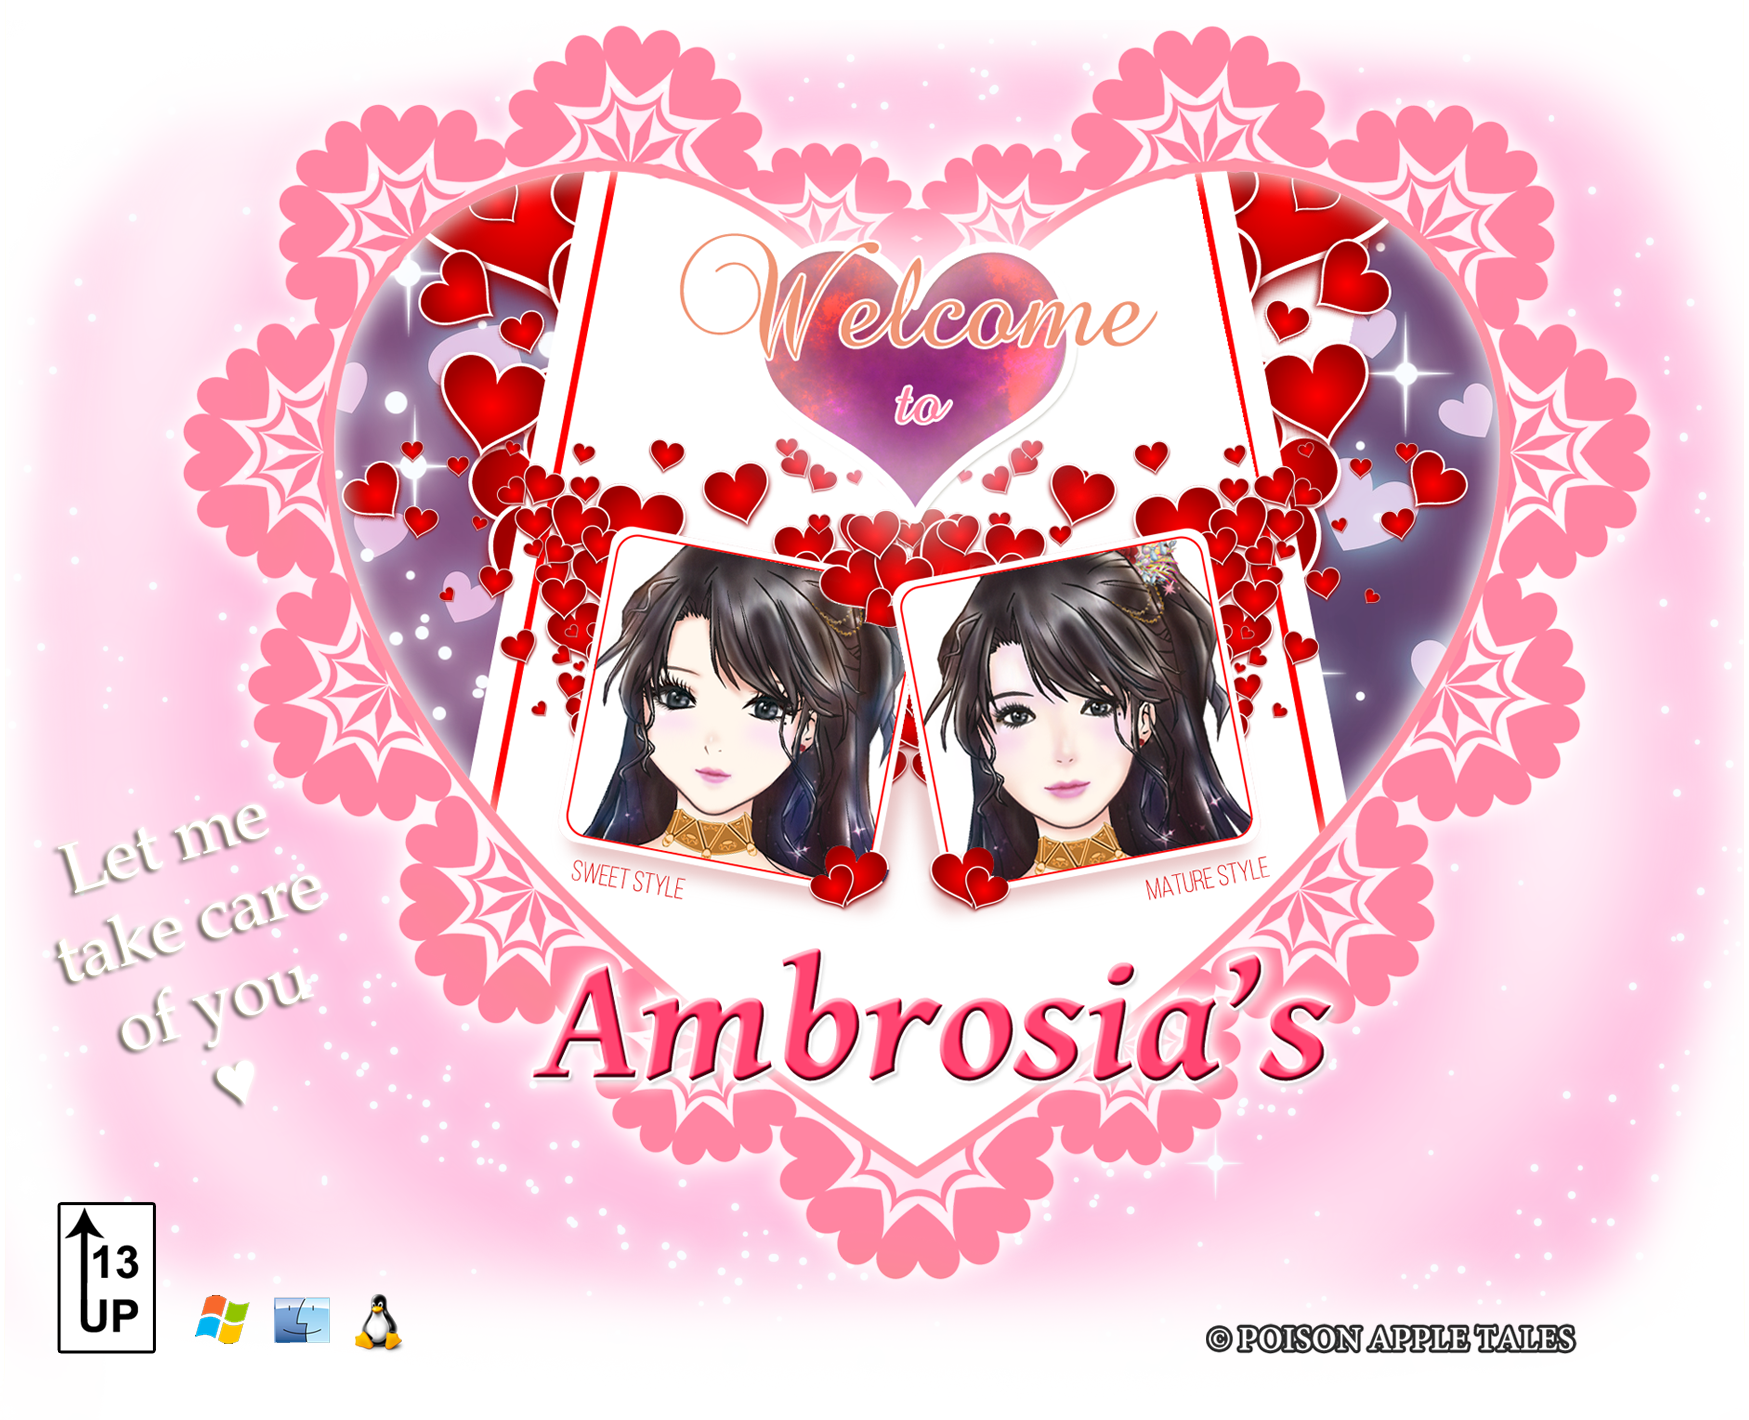 Ambrosia's